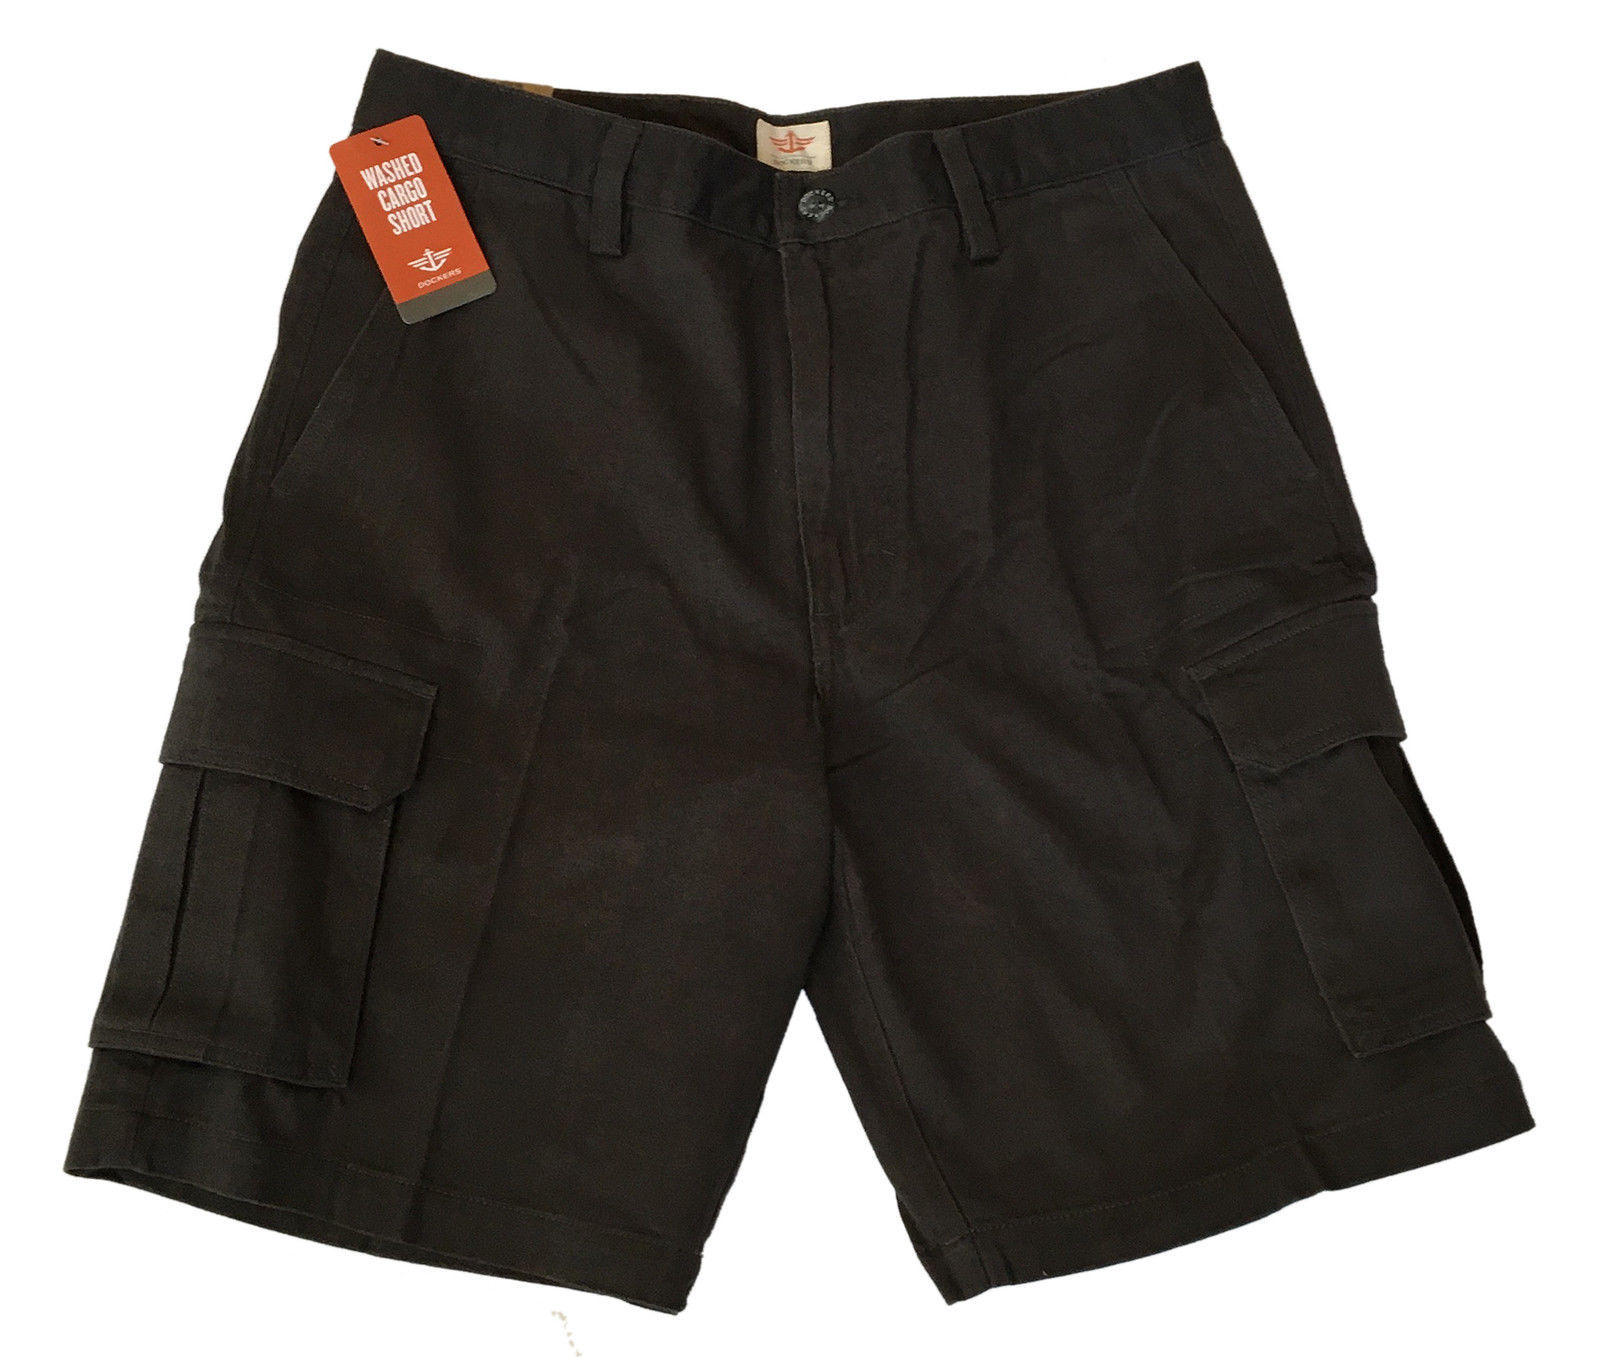 Dockers Men's Flat Front Cotton Cargo Short - Shorts